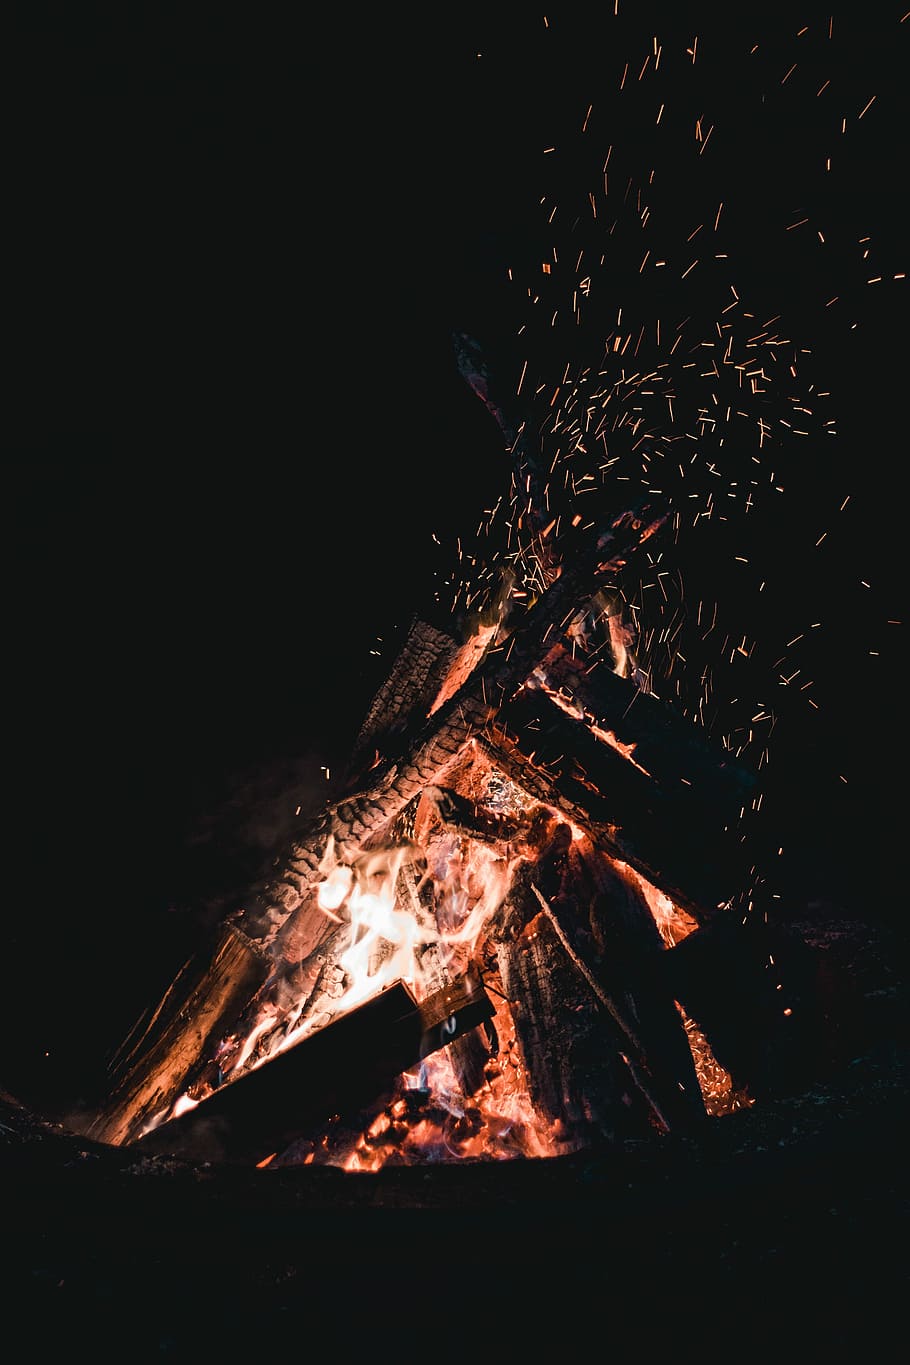 HD wallpaper: bonfire during nighttime, wood, sparks, camping, outdoors, dark